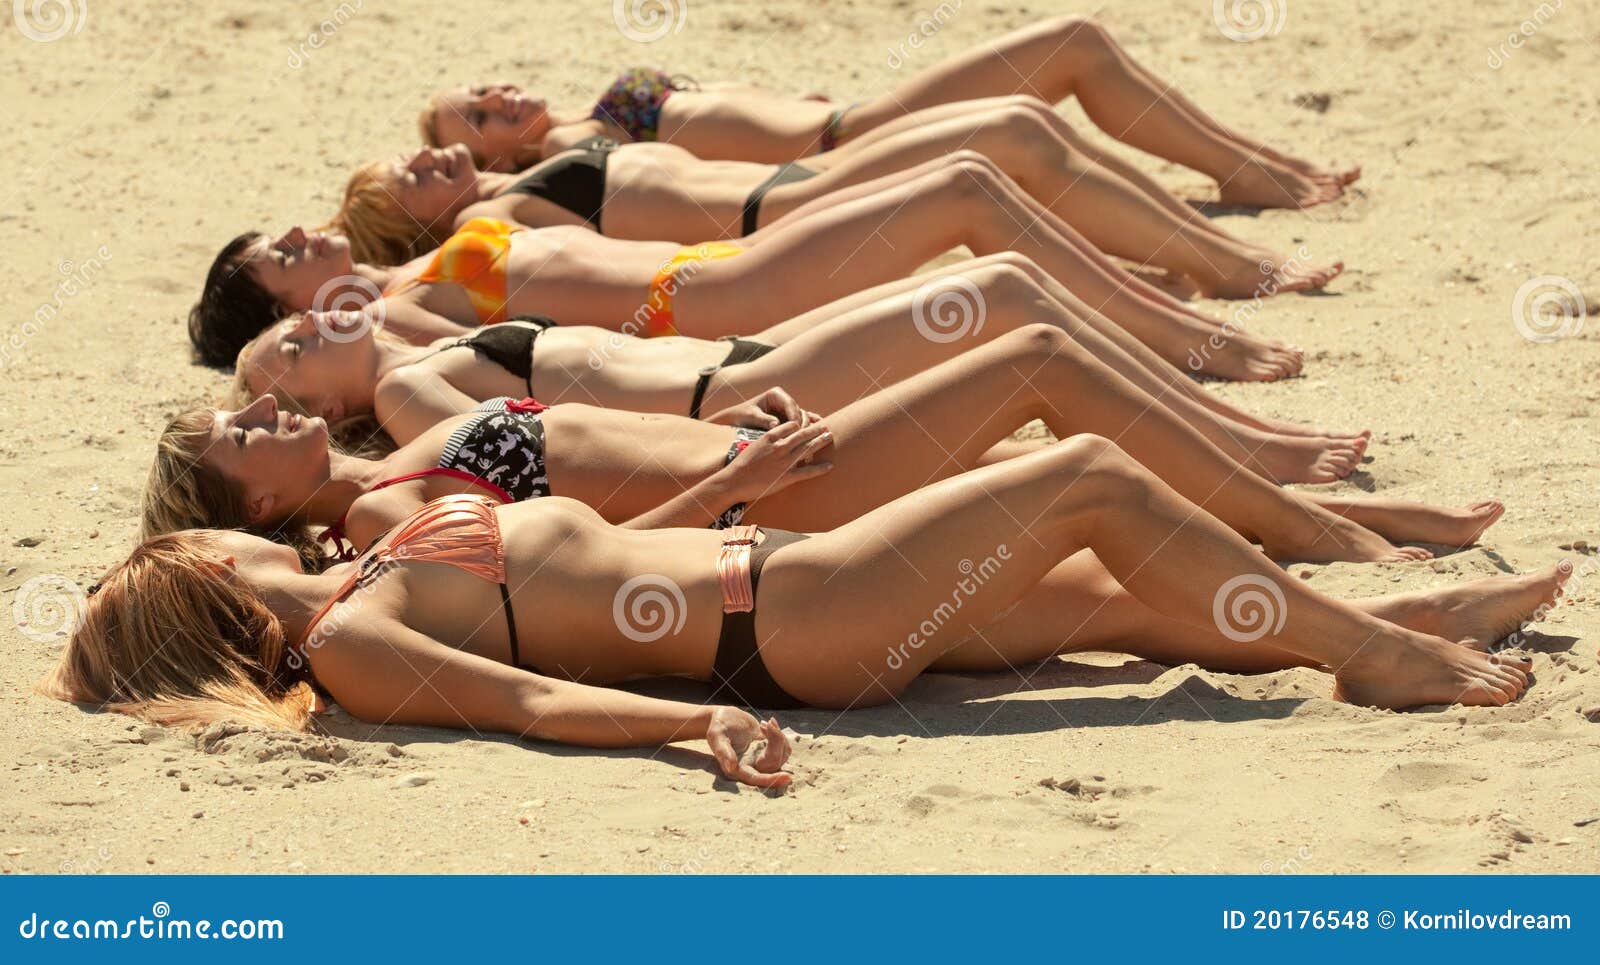 barefoot beach girls voyeur Sex Images Hq